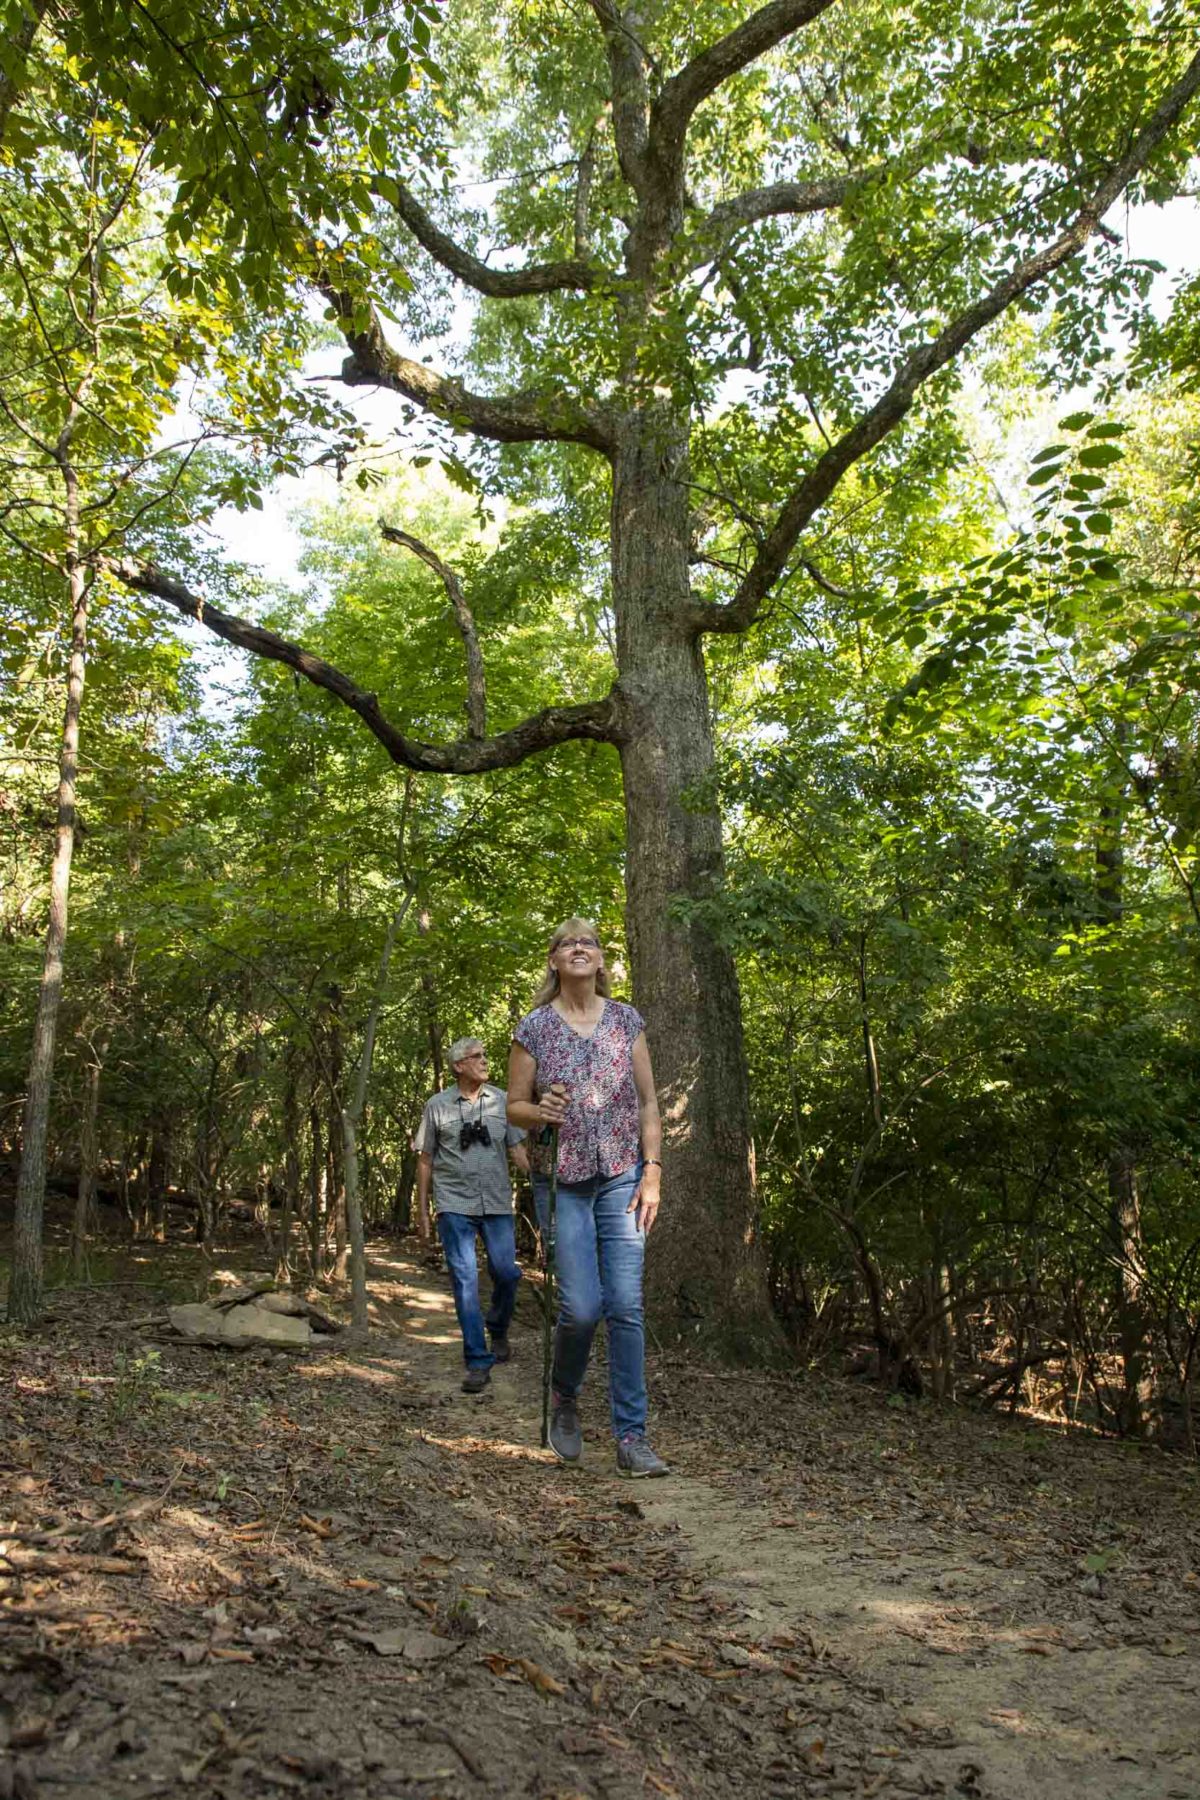 Two hikers with walking sticks walk toward the viewer below a tall oak tree